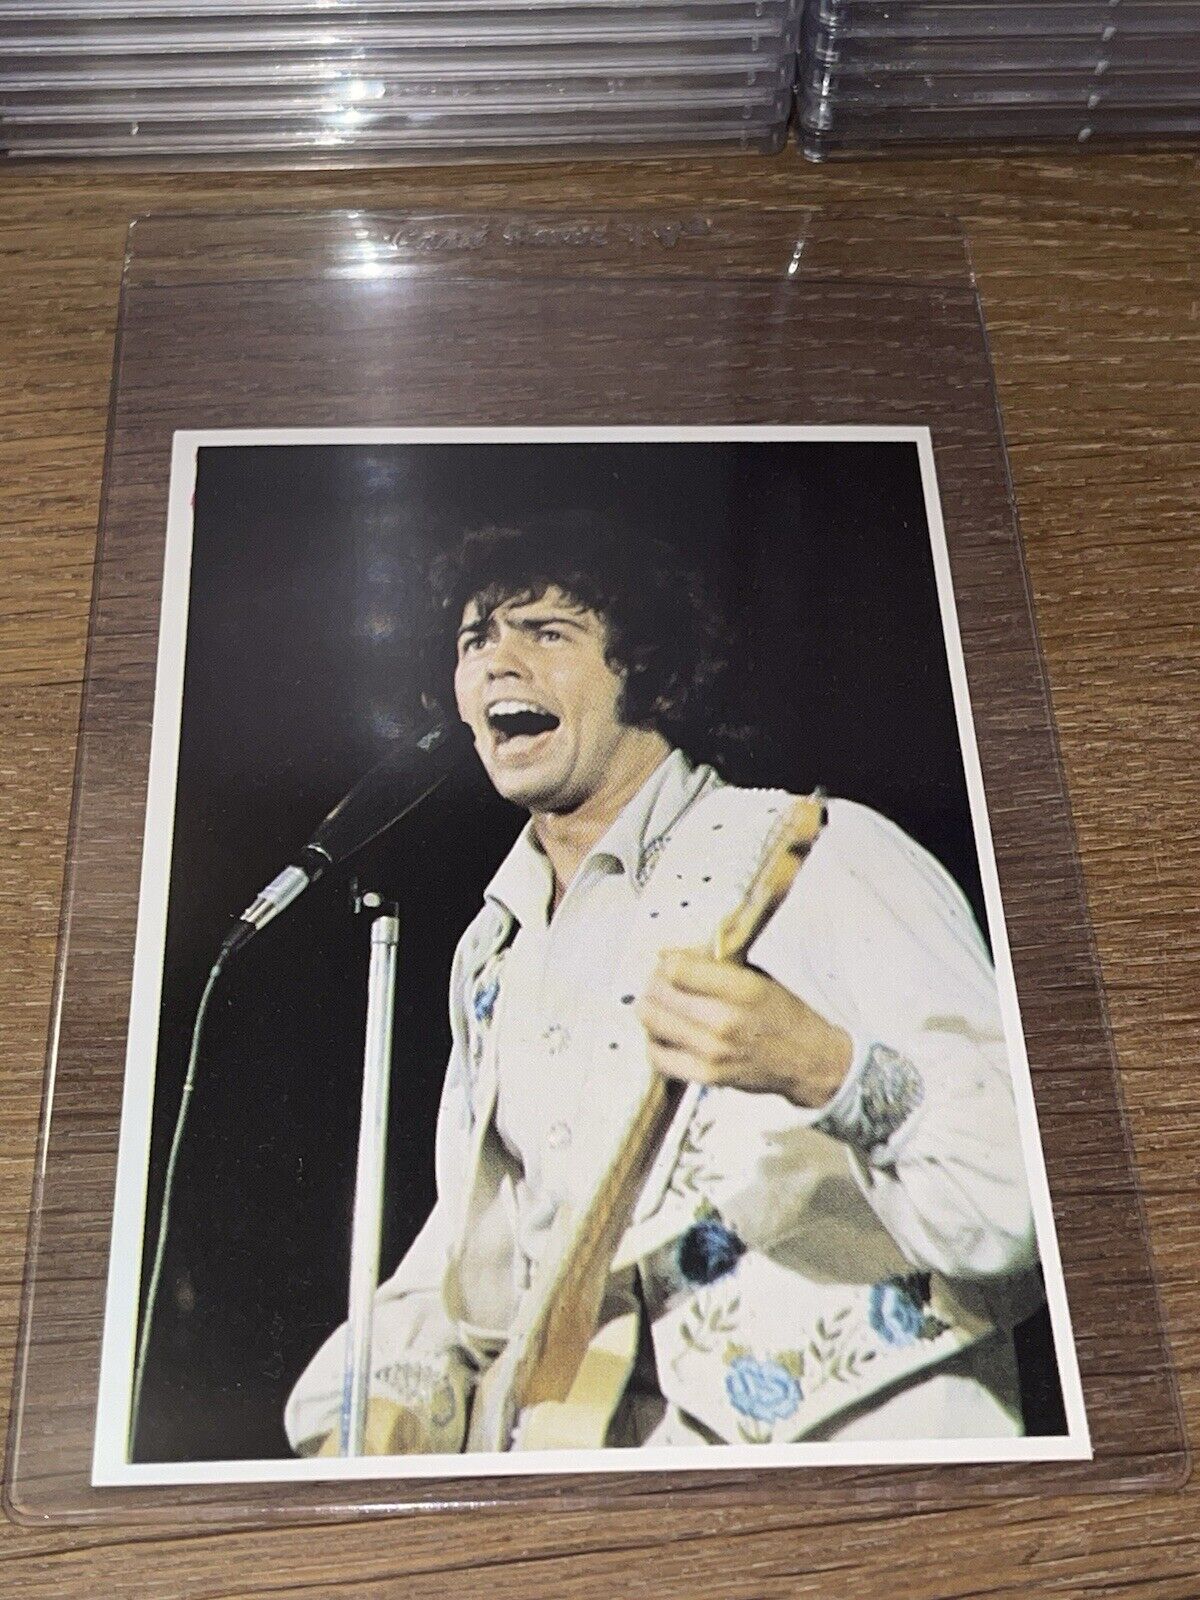 1974 The Osmonds Alan Osmond Panini 🎥 Picture Music Card Pop Sticker Card RARE